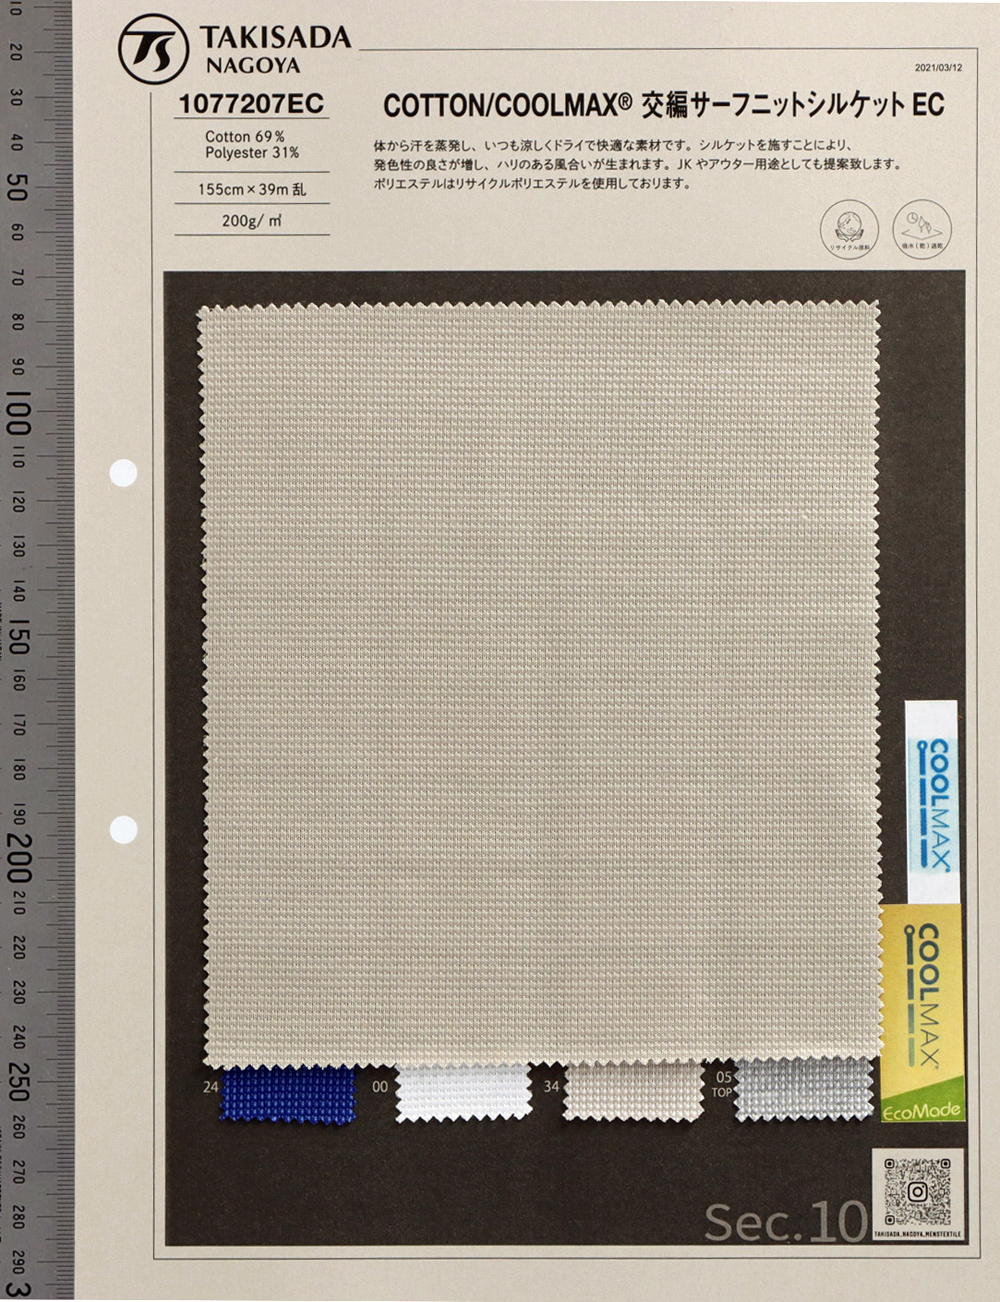 1077207EC COTTON / COOLMAX® Cross-knit Surf Knit Mercerized EC[Textile / Fabric] Takisada Nagoya